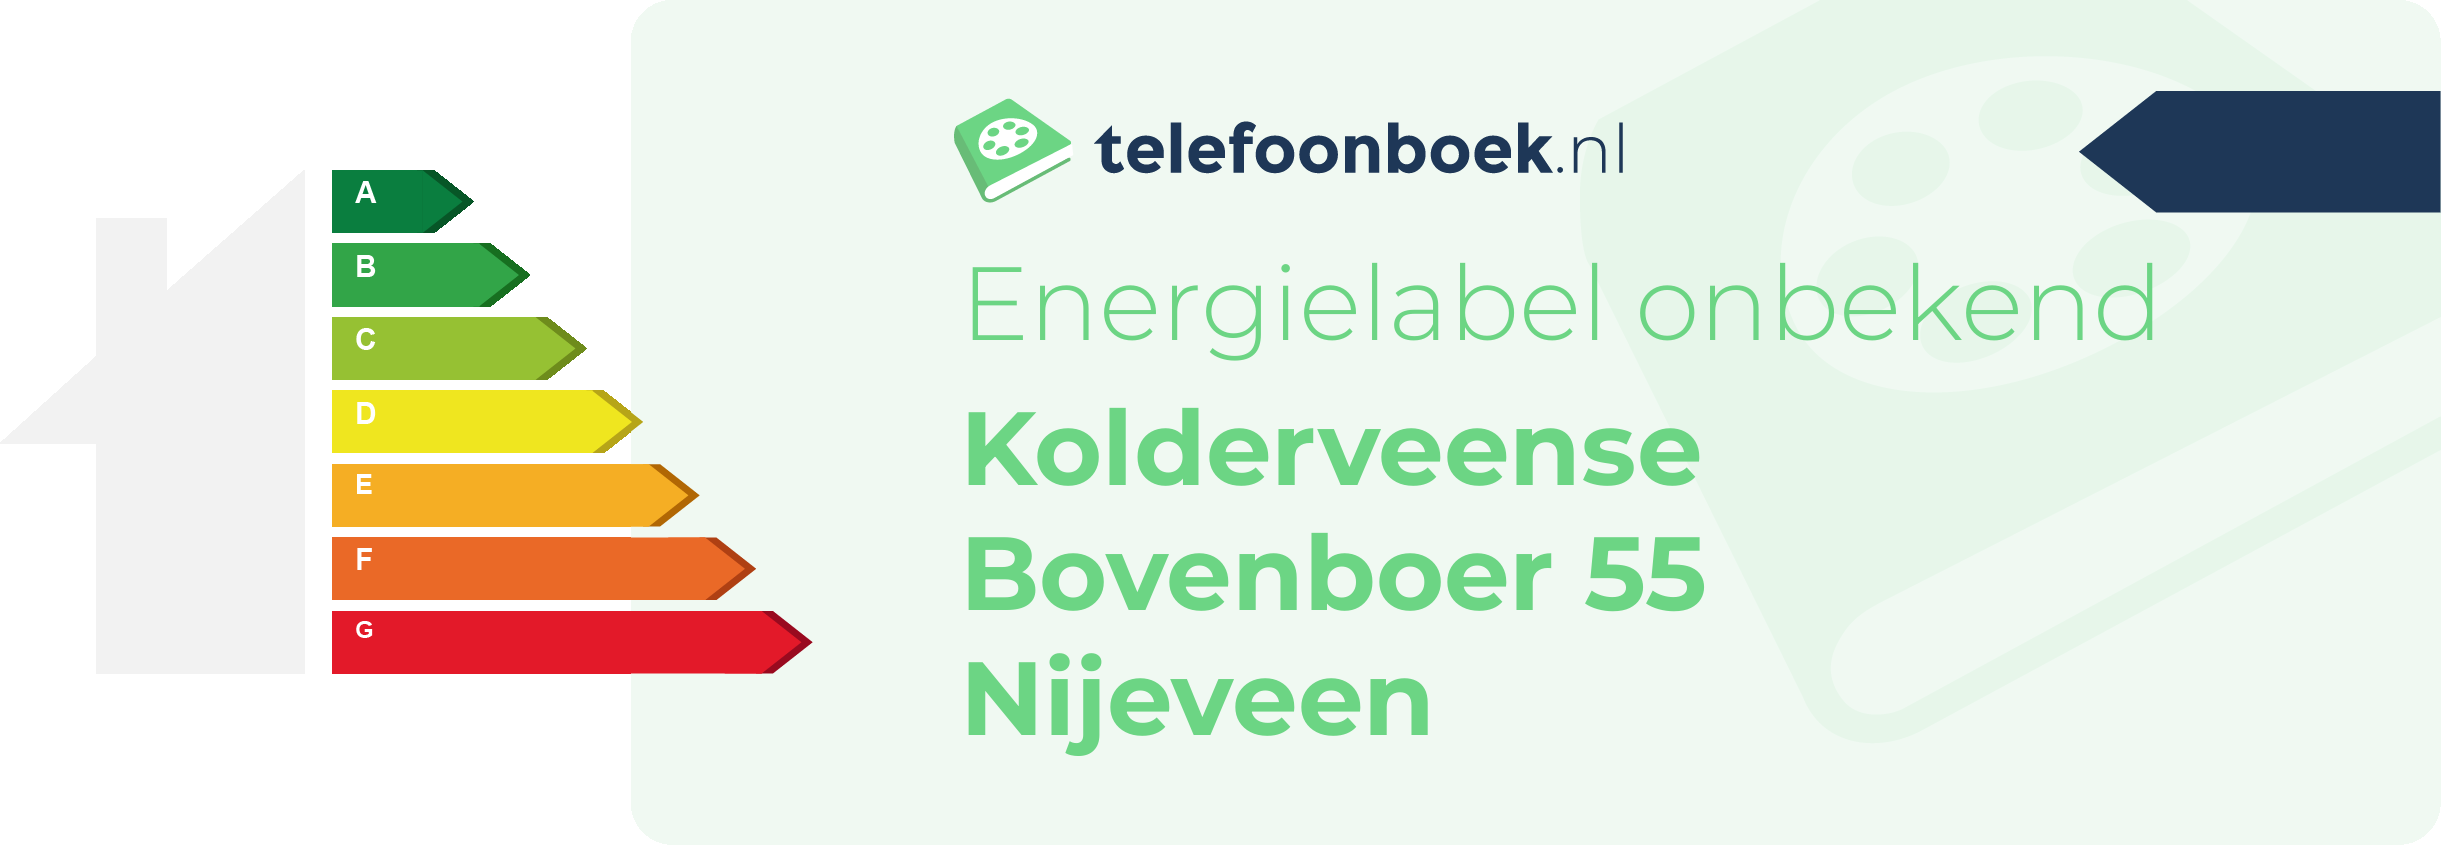 Energielabel Kolderveense Bovenboer 55 Nijeveen